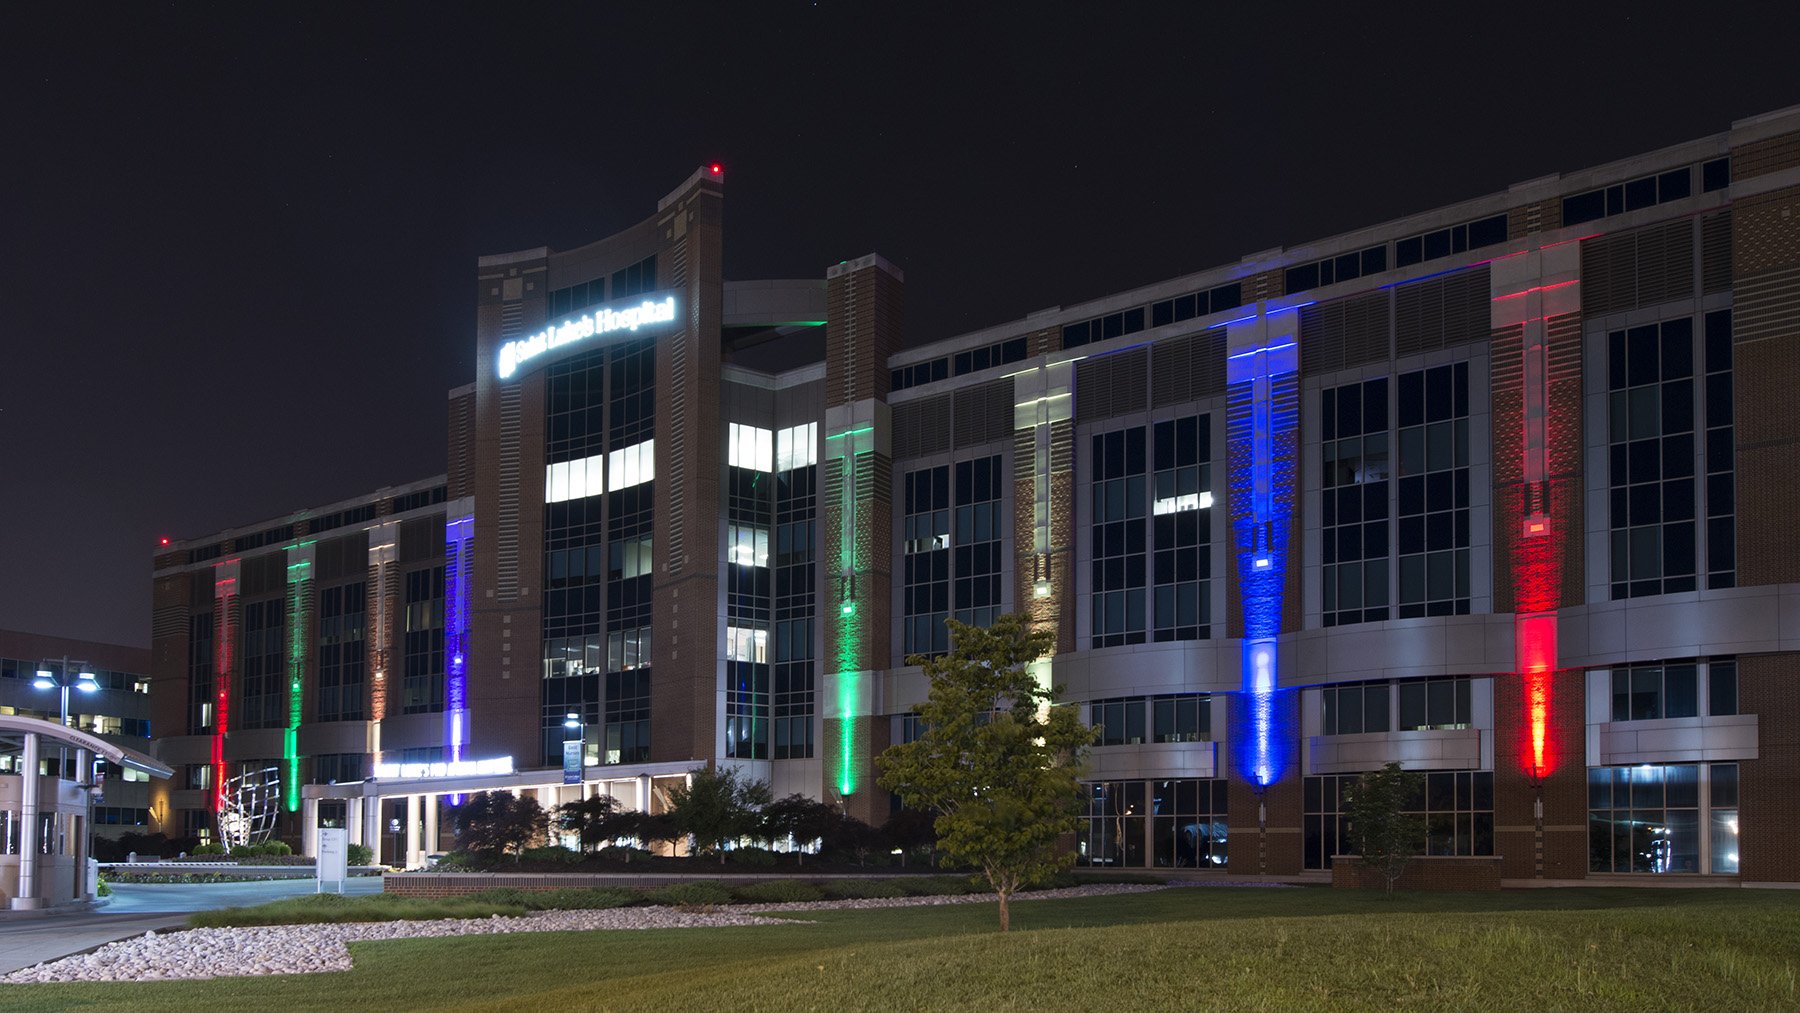 Saint Luke's Hospital of Kansas City is shown at light with rainbow lights.